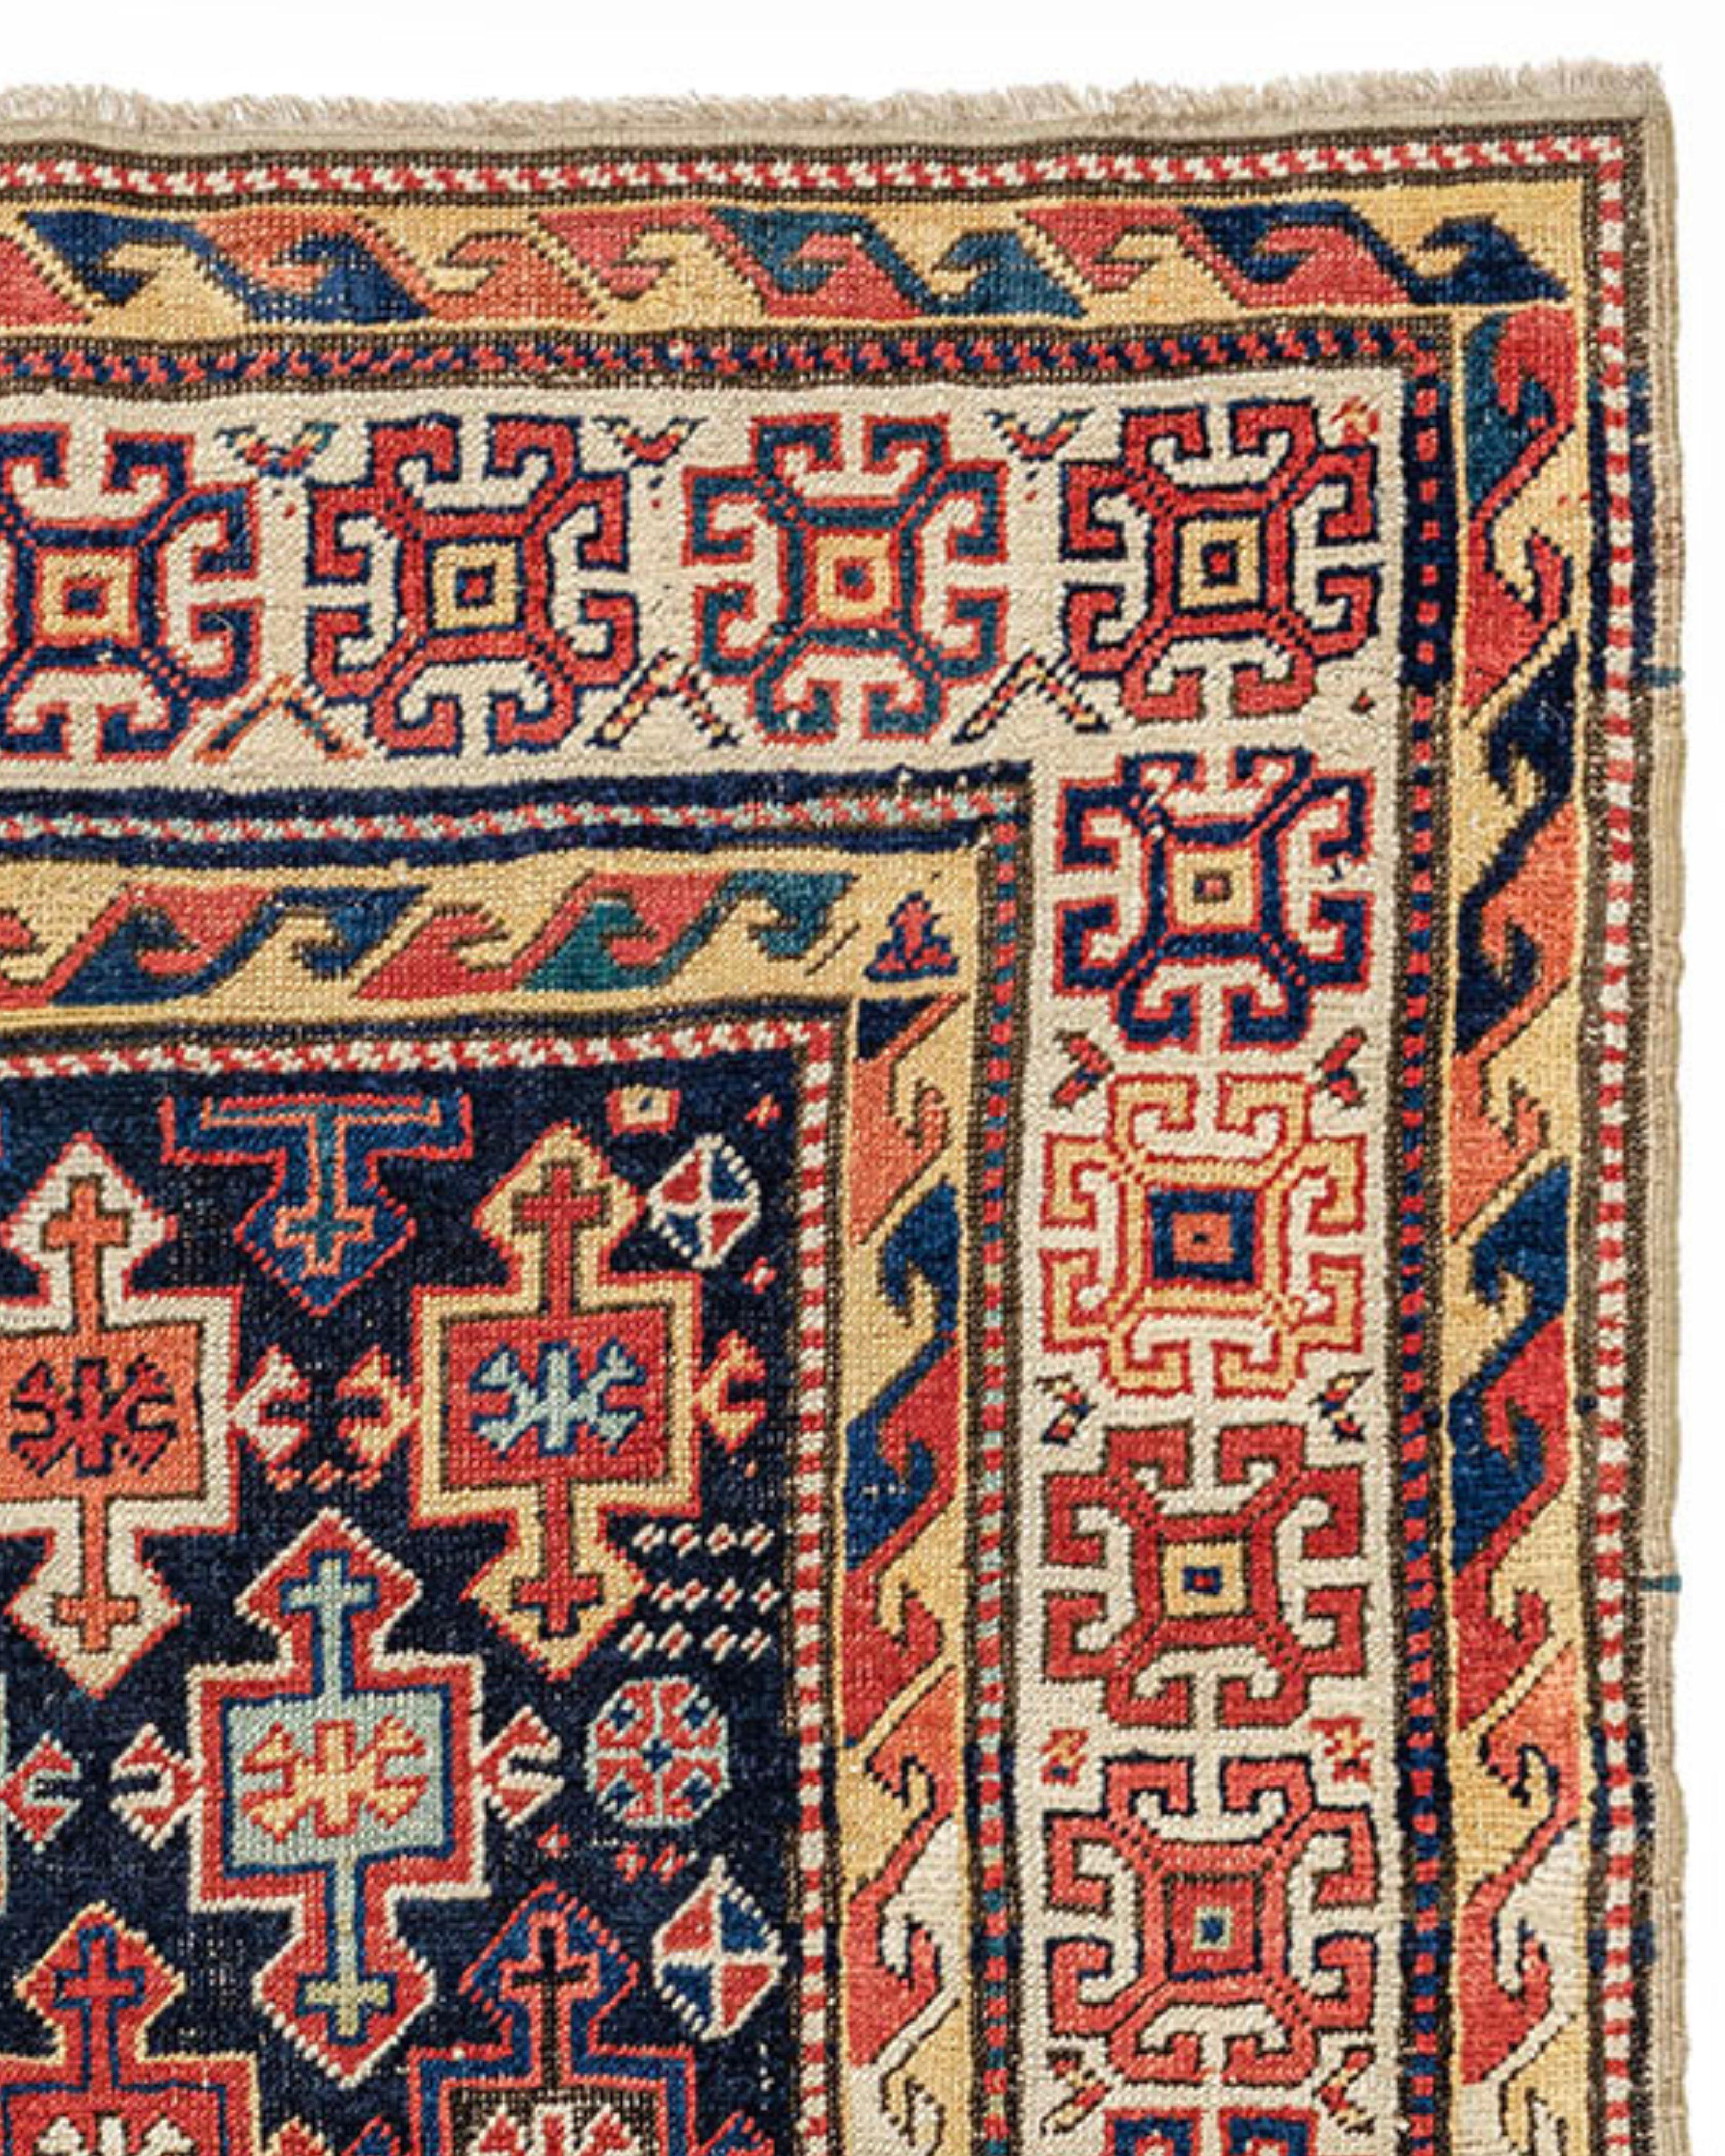 Antique Caucasian Avar Rug, Mid-19th Century

Additional Information:
Dimensions: 3'3